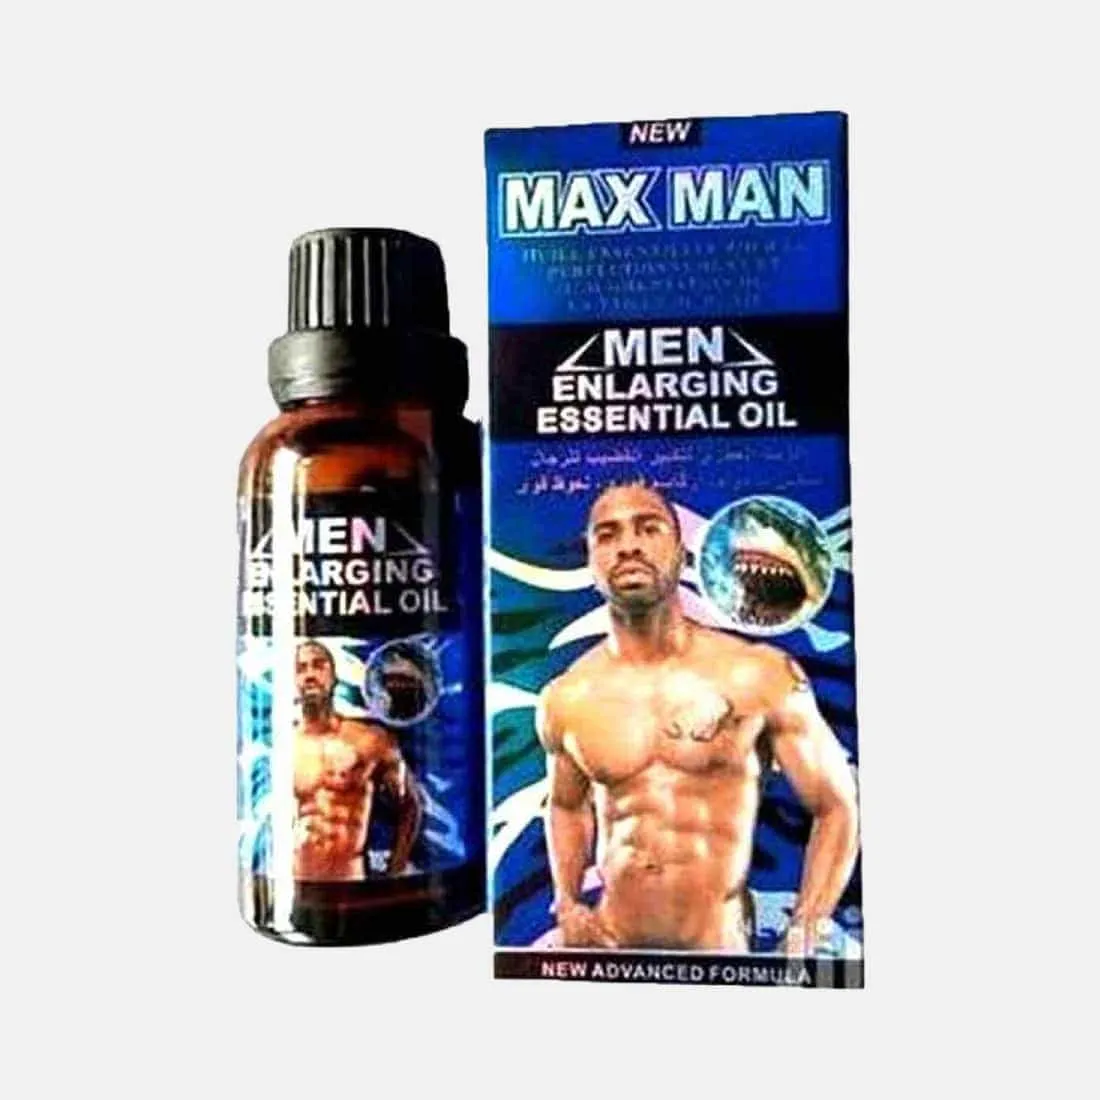 Max Men Enlargement Oil, Men's Essential Oil for Penis Enhancement